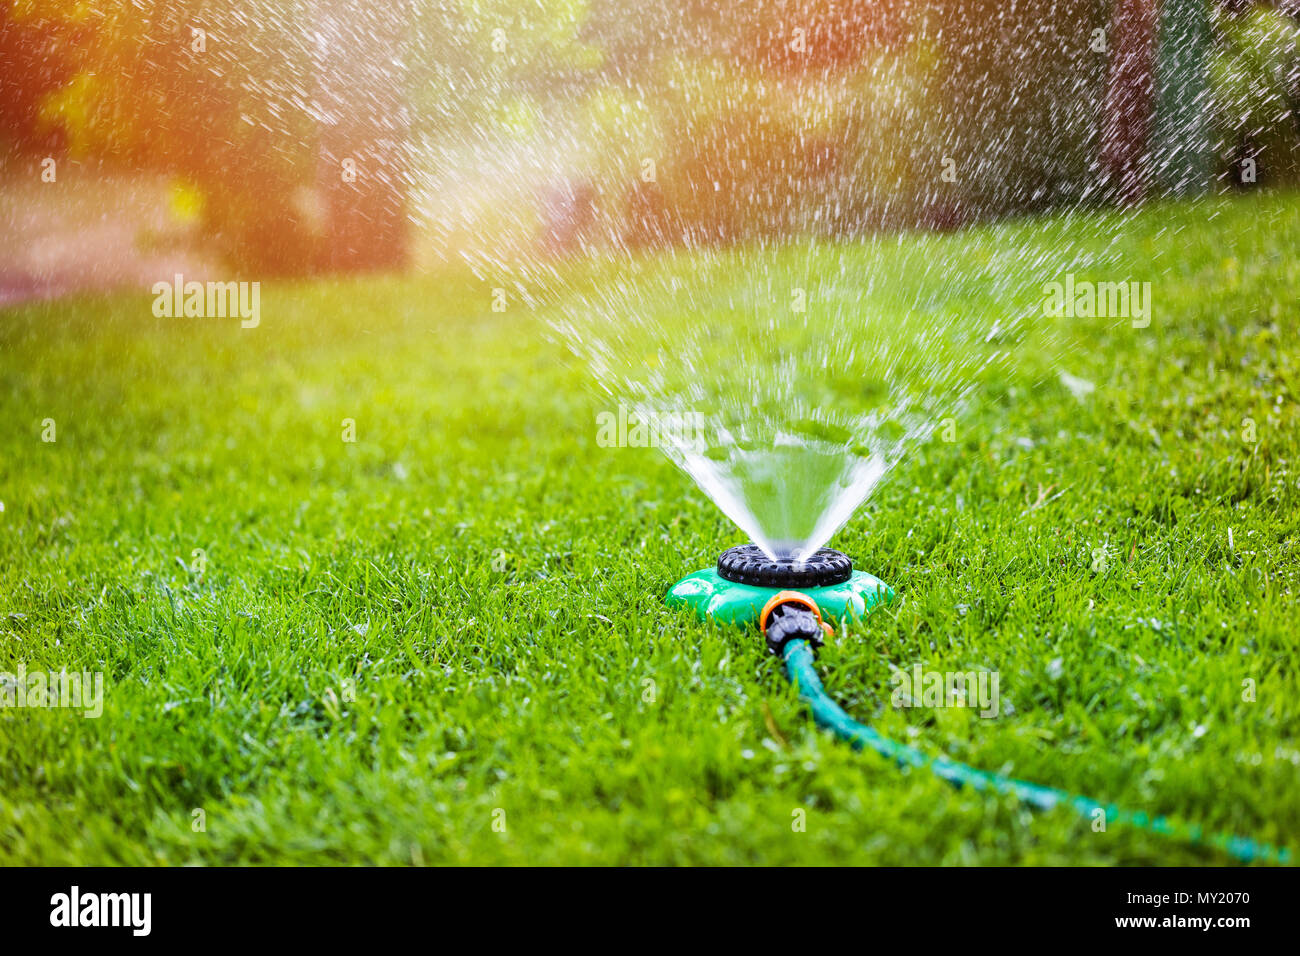 garden sprinkler watering grass at home backyard Stock Photo